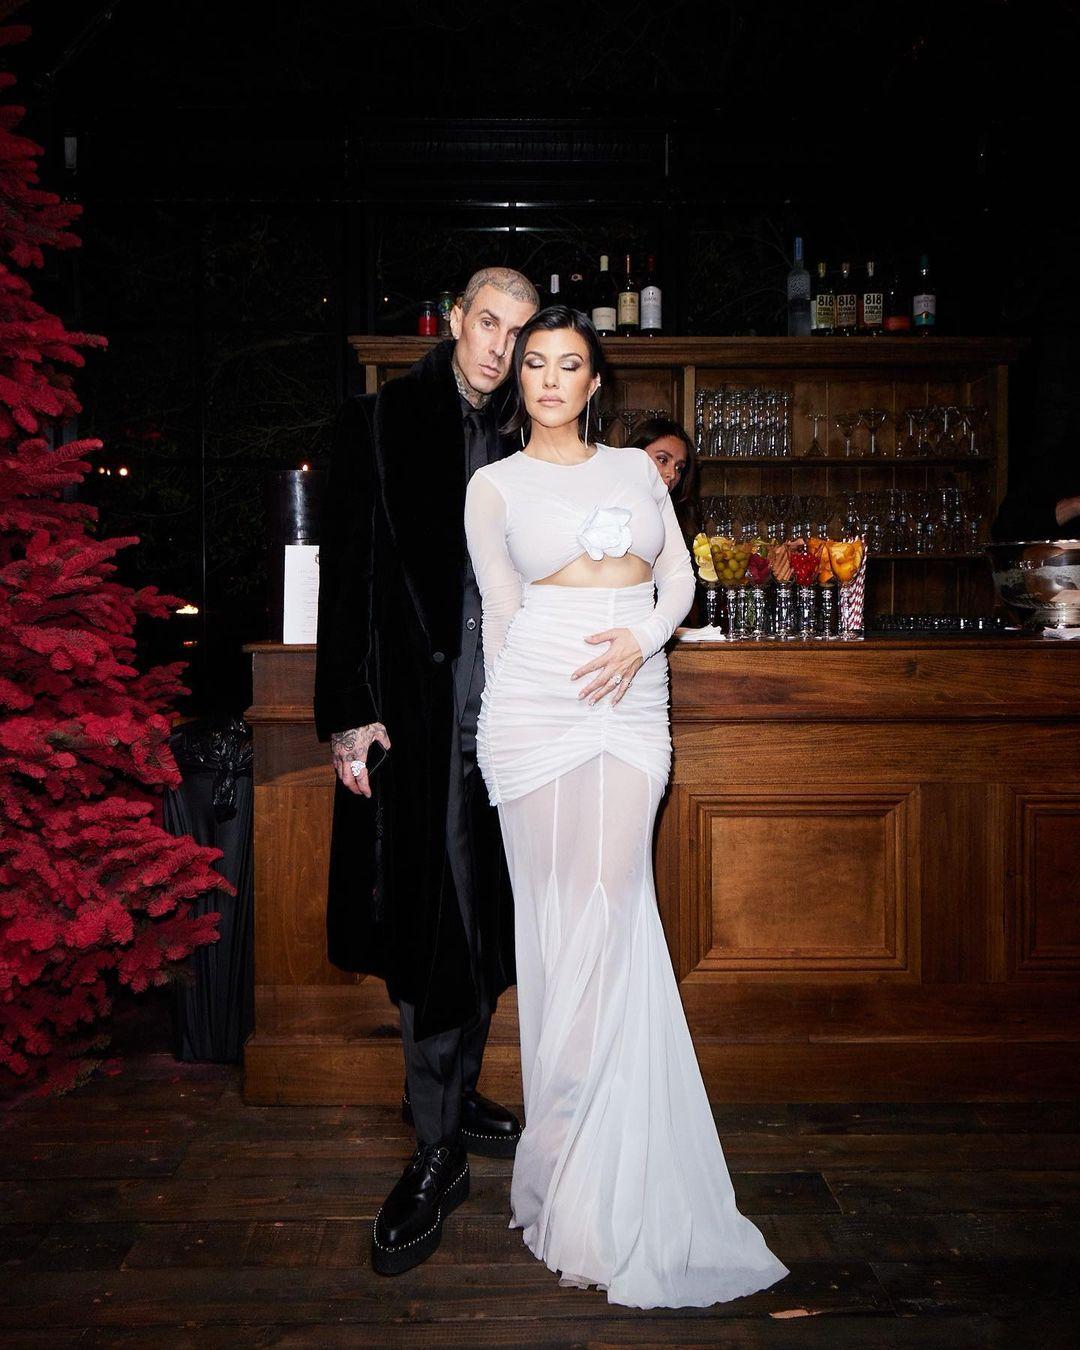 Portrait of the lovely couple Travis Barker and Kourtney Kardashian